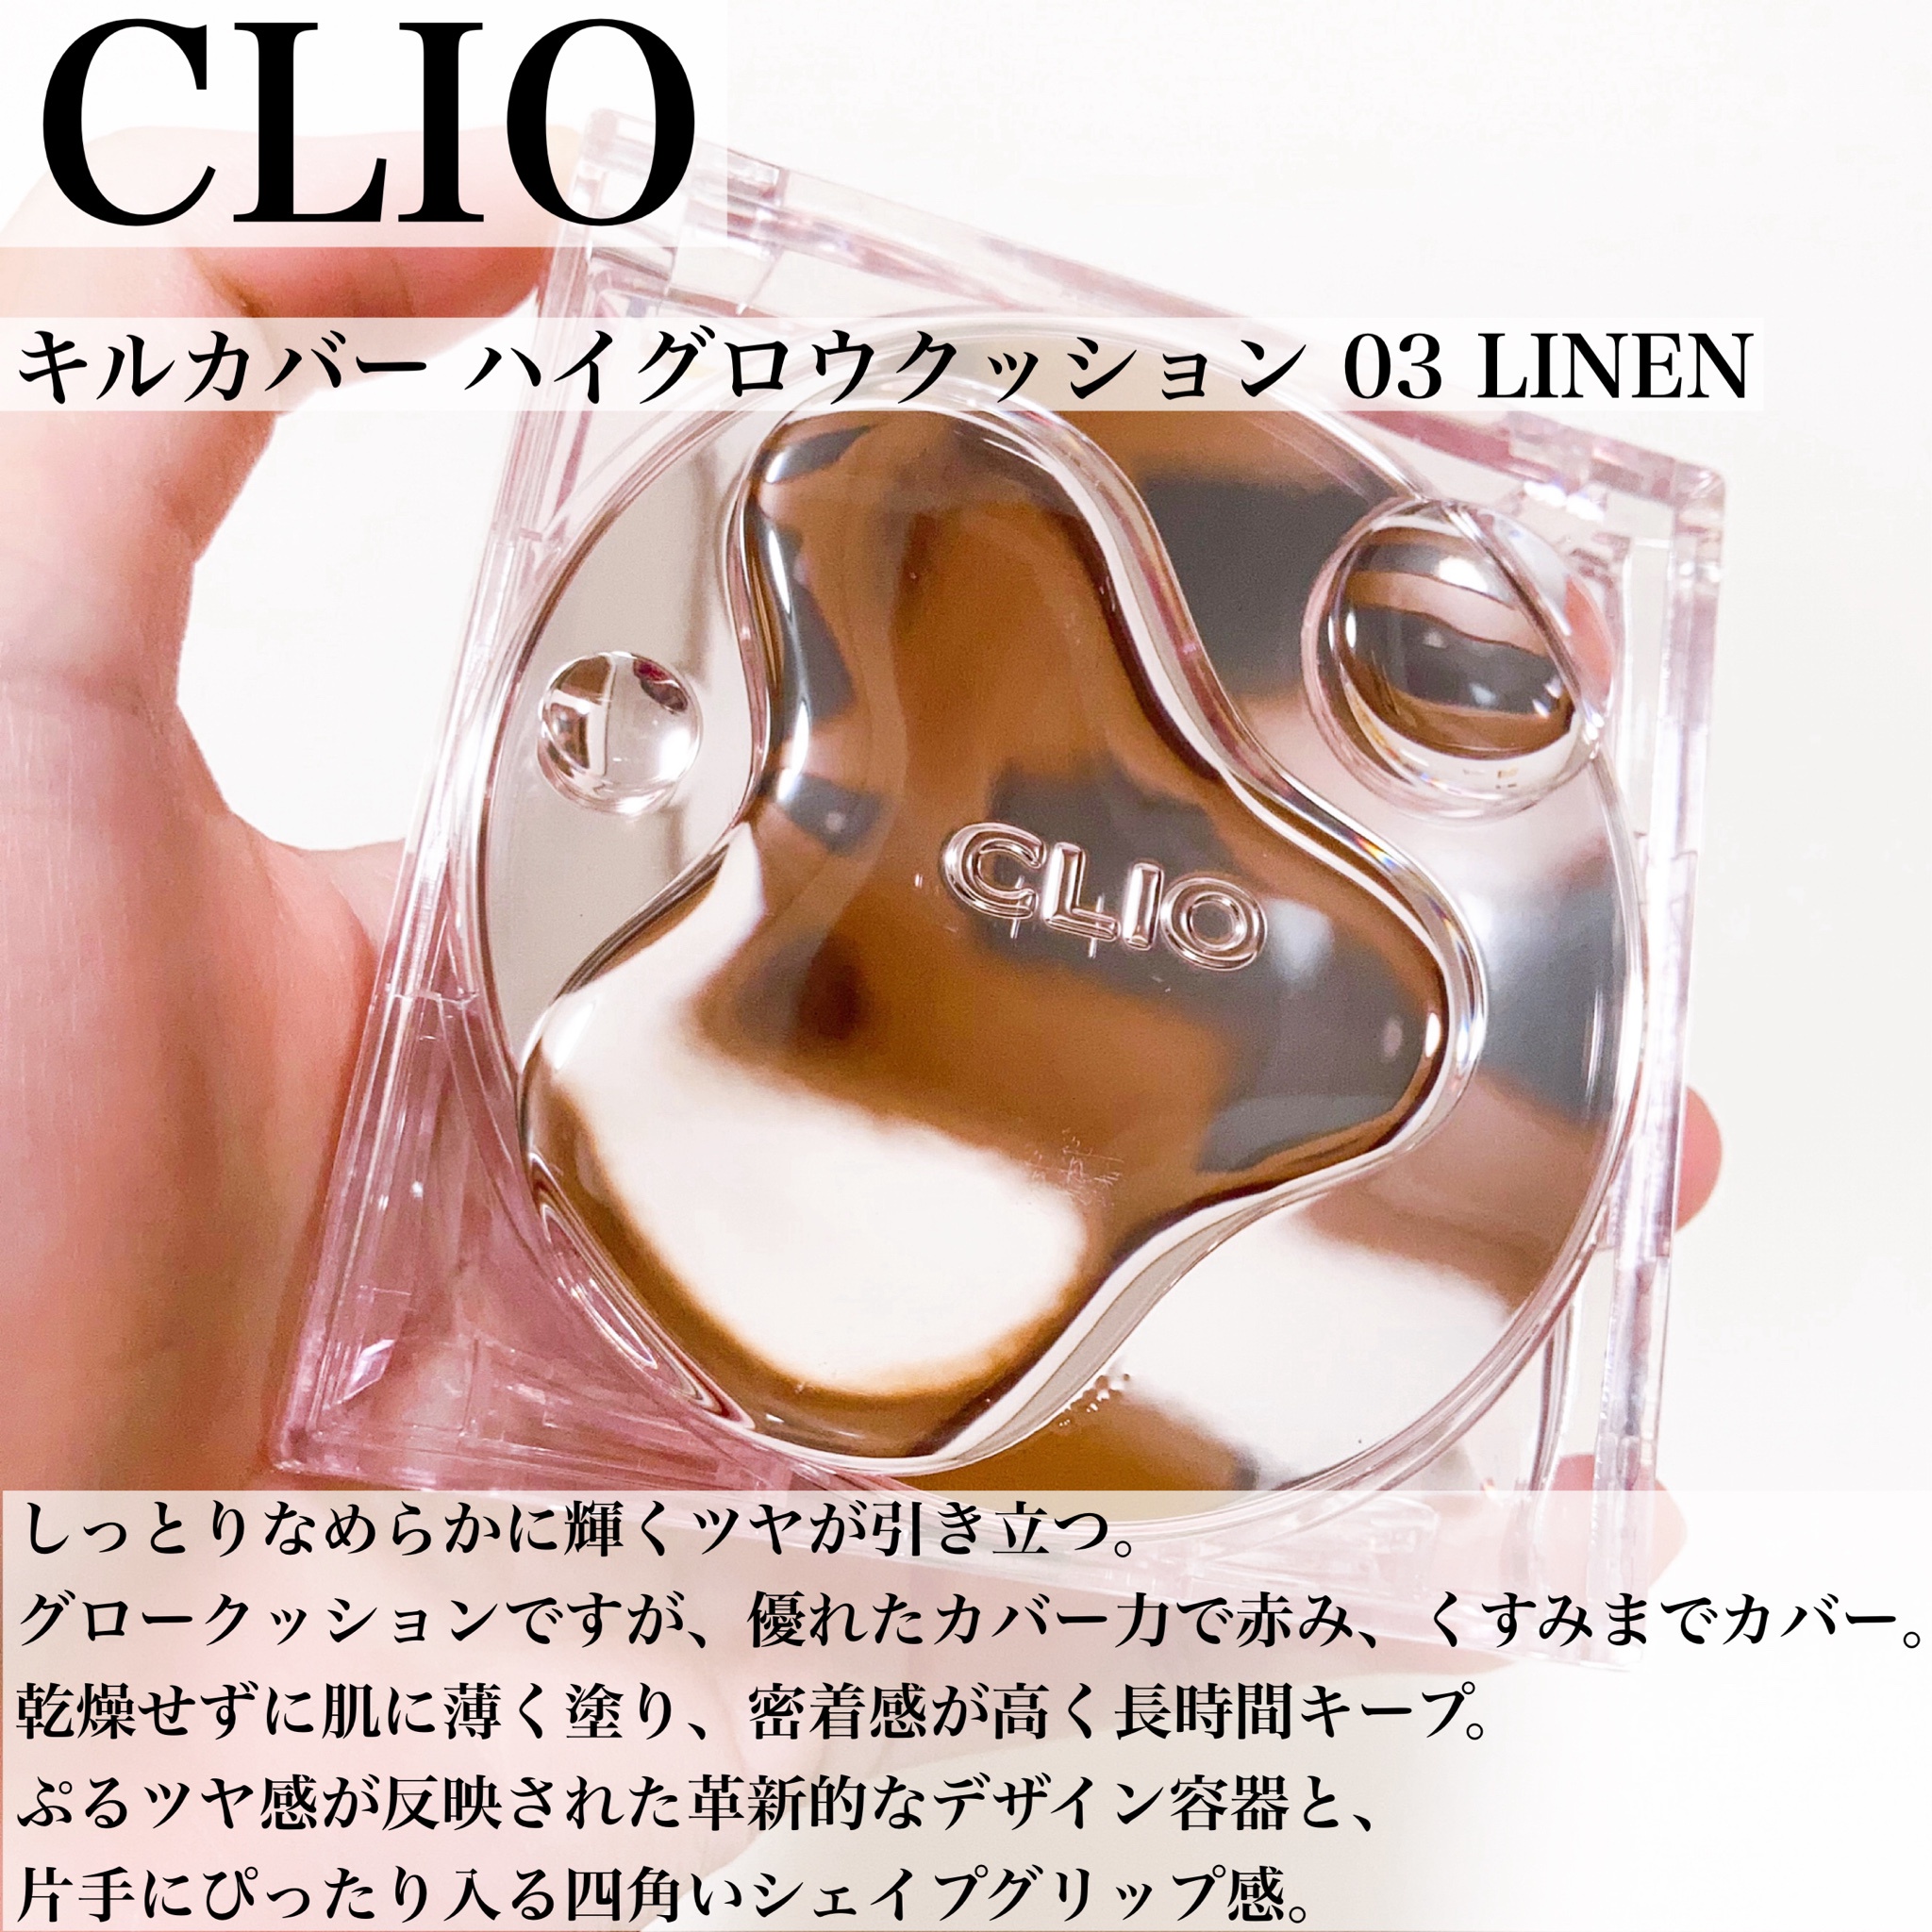 CLIO / キルカバーハイグロウクッション 03 リネンの公式商品情報